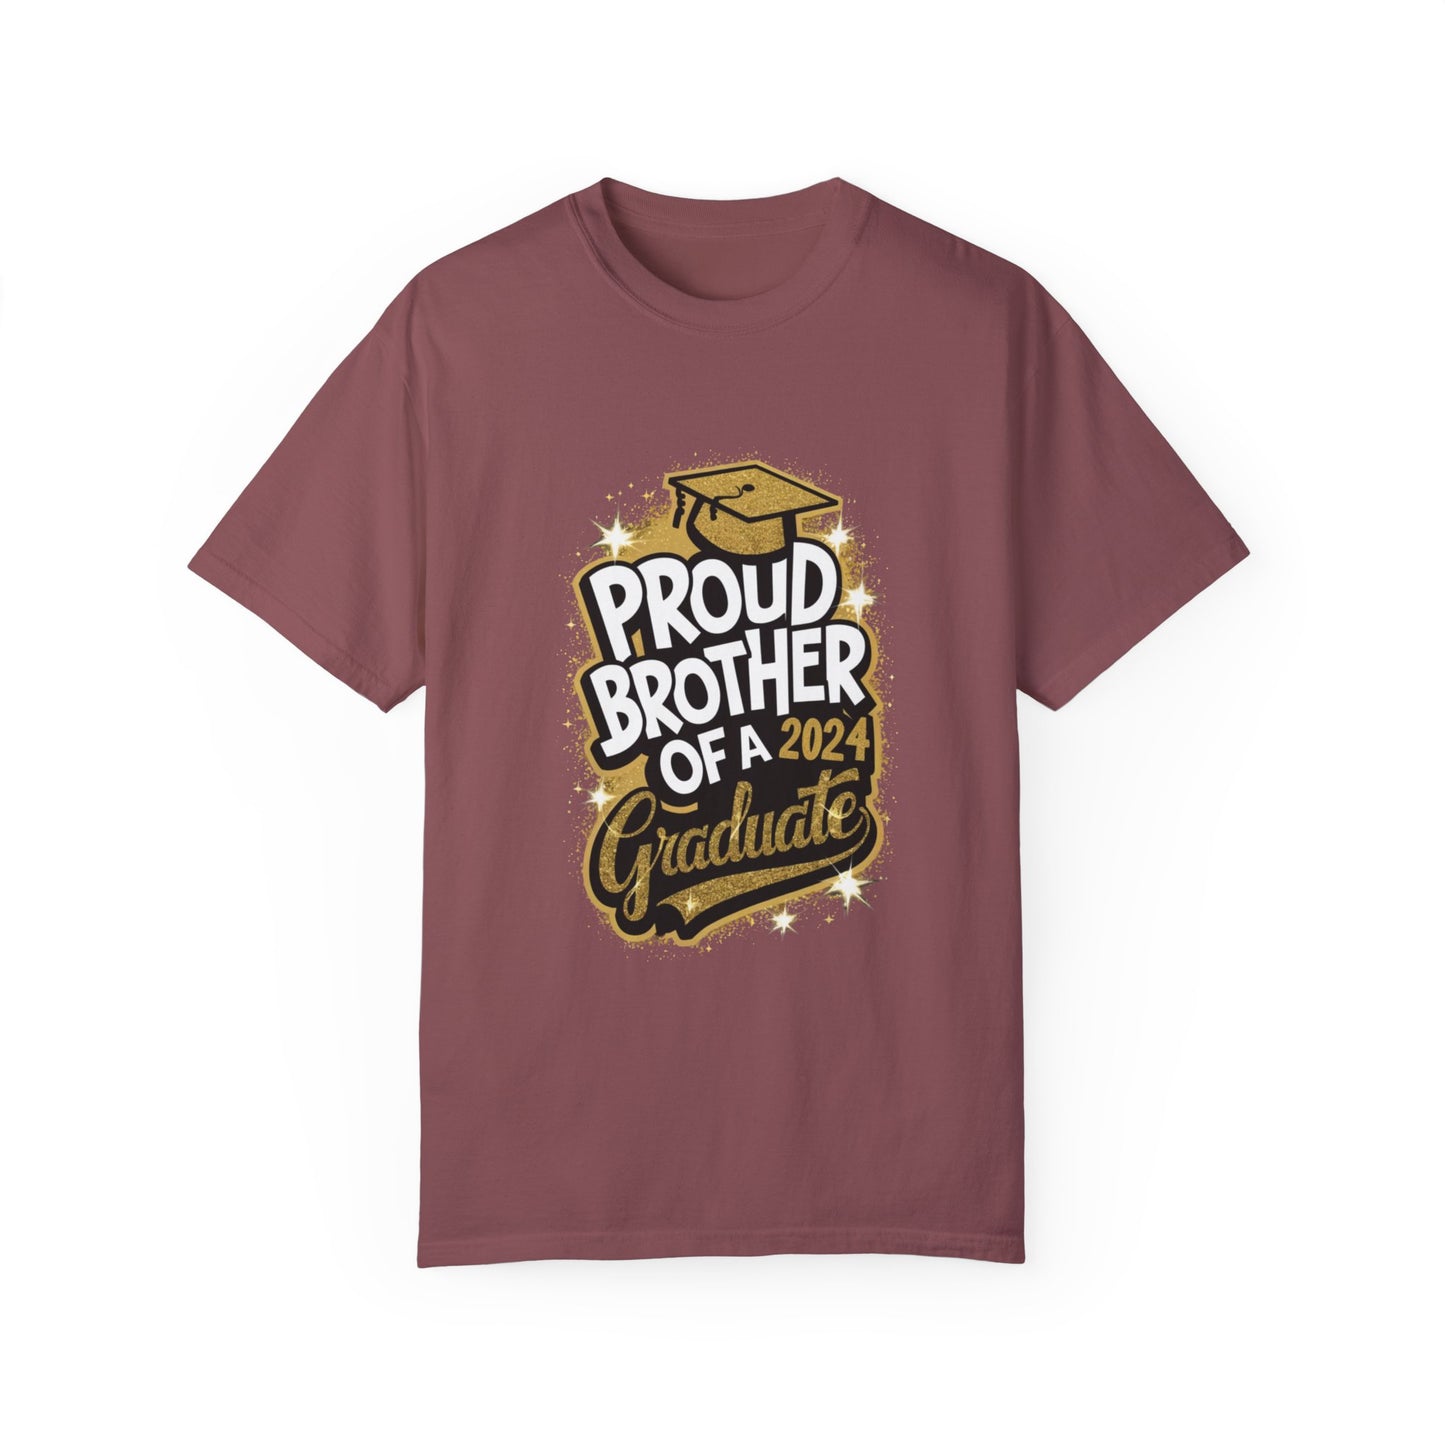 Proud Brother of a 2024 Graduate Unisex Garment-dyed T-shirt Cotton Funny Humorous Graphic Soft Premium Unisex Men Women Brick T-shirt Birthday Gift-5